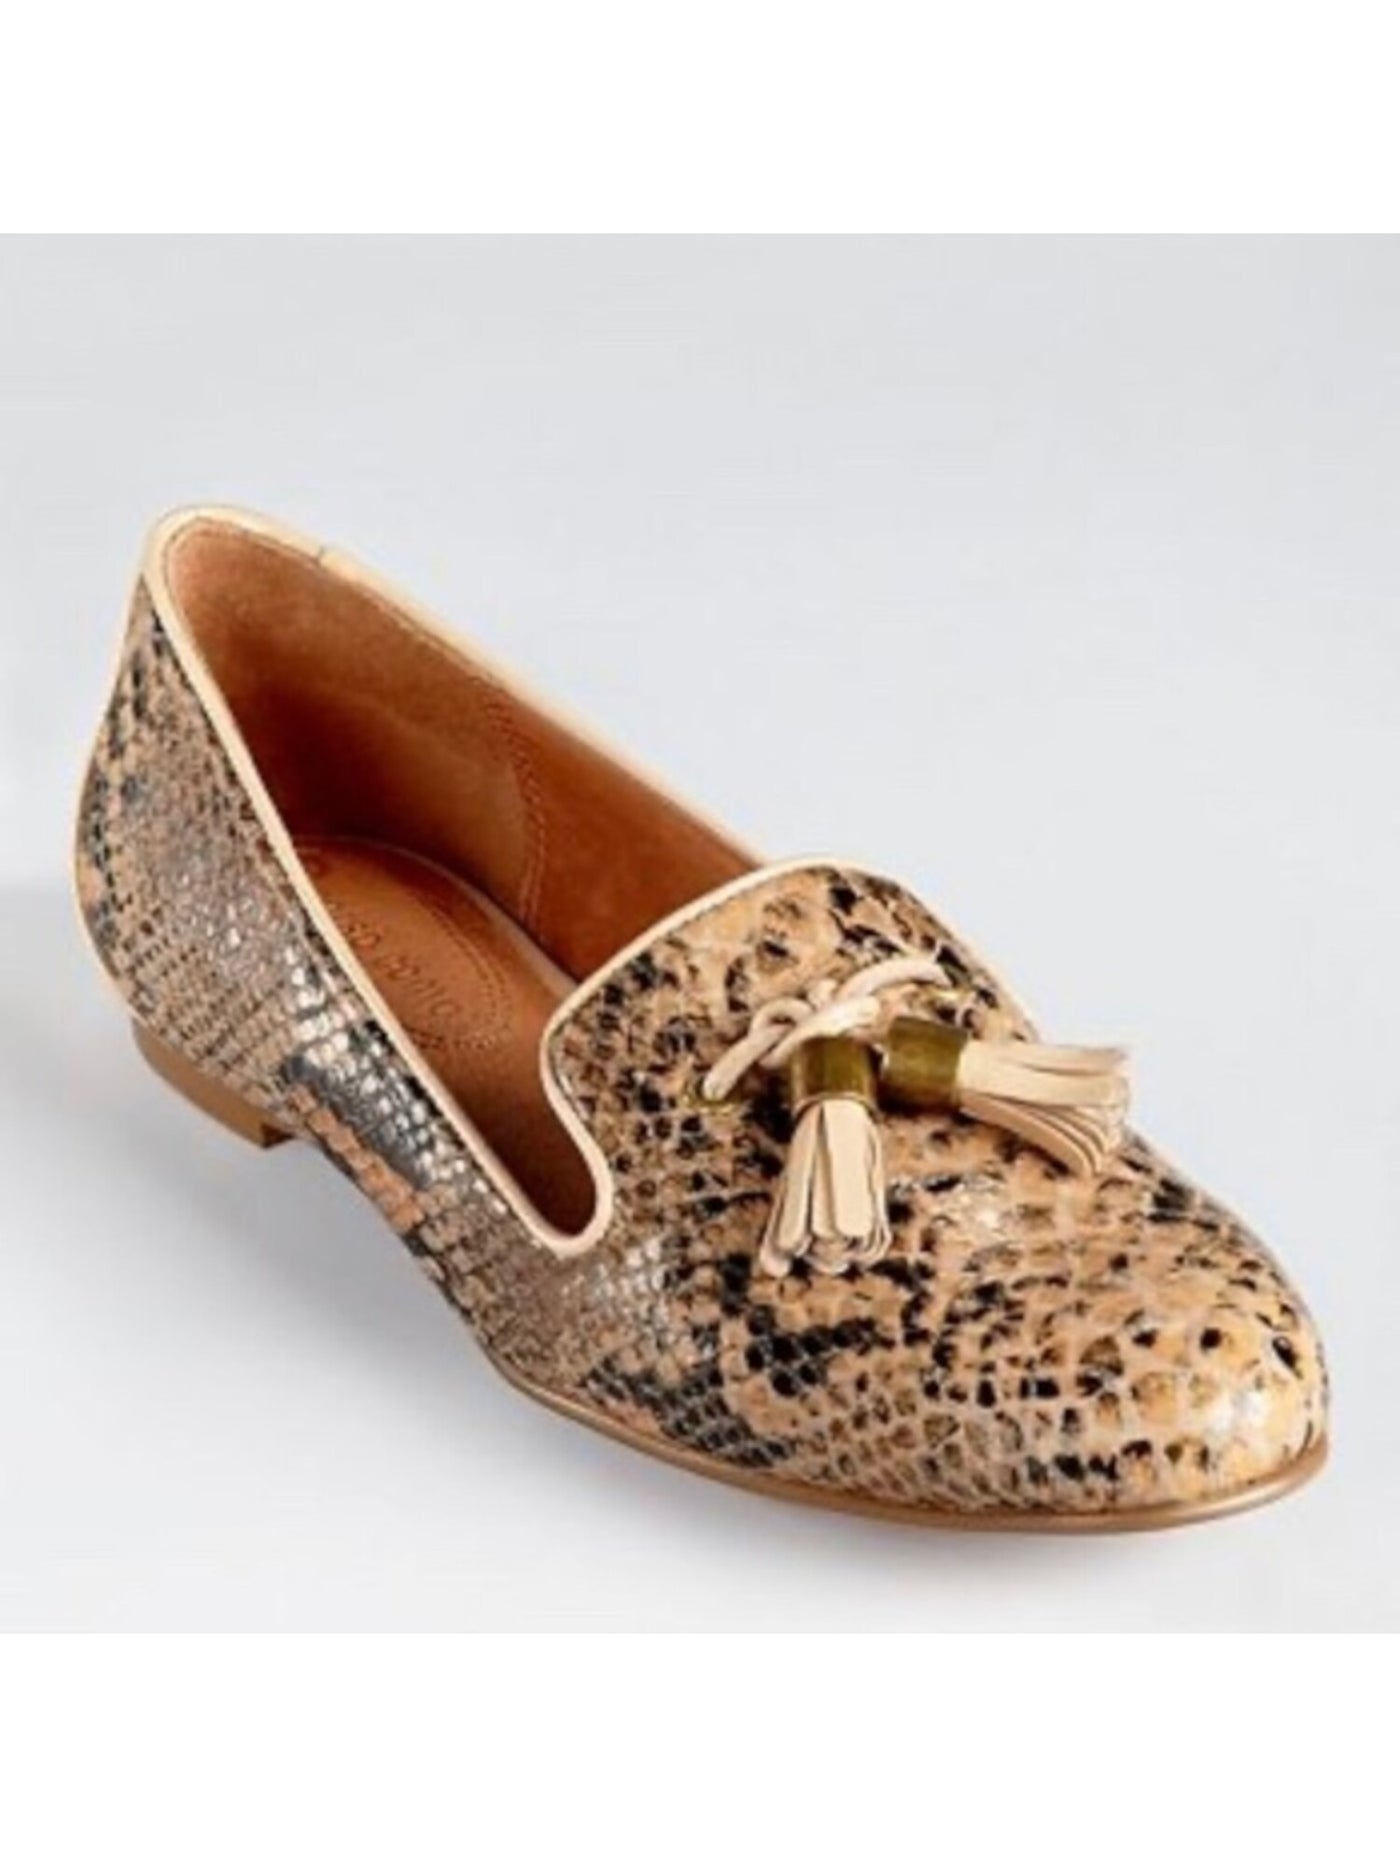 CORSO COMO Womens Beige Snake Tasseled Cushioned Valeda Round Toe Slip On Leather Loafers Shoes 5.5 M